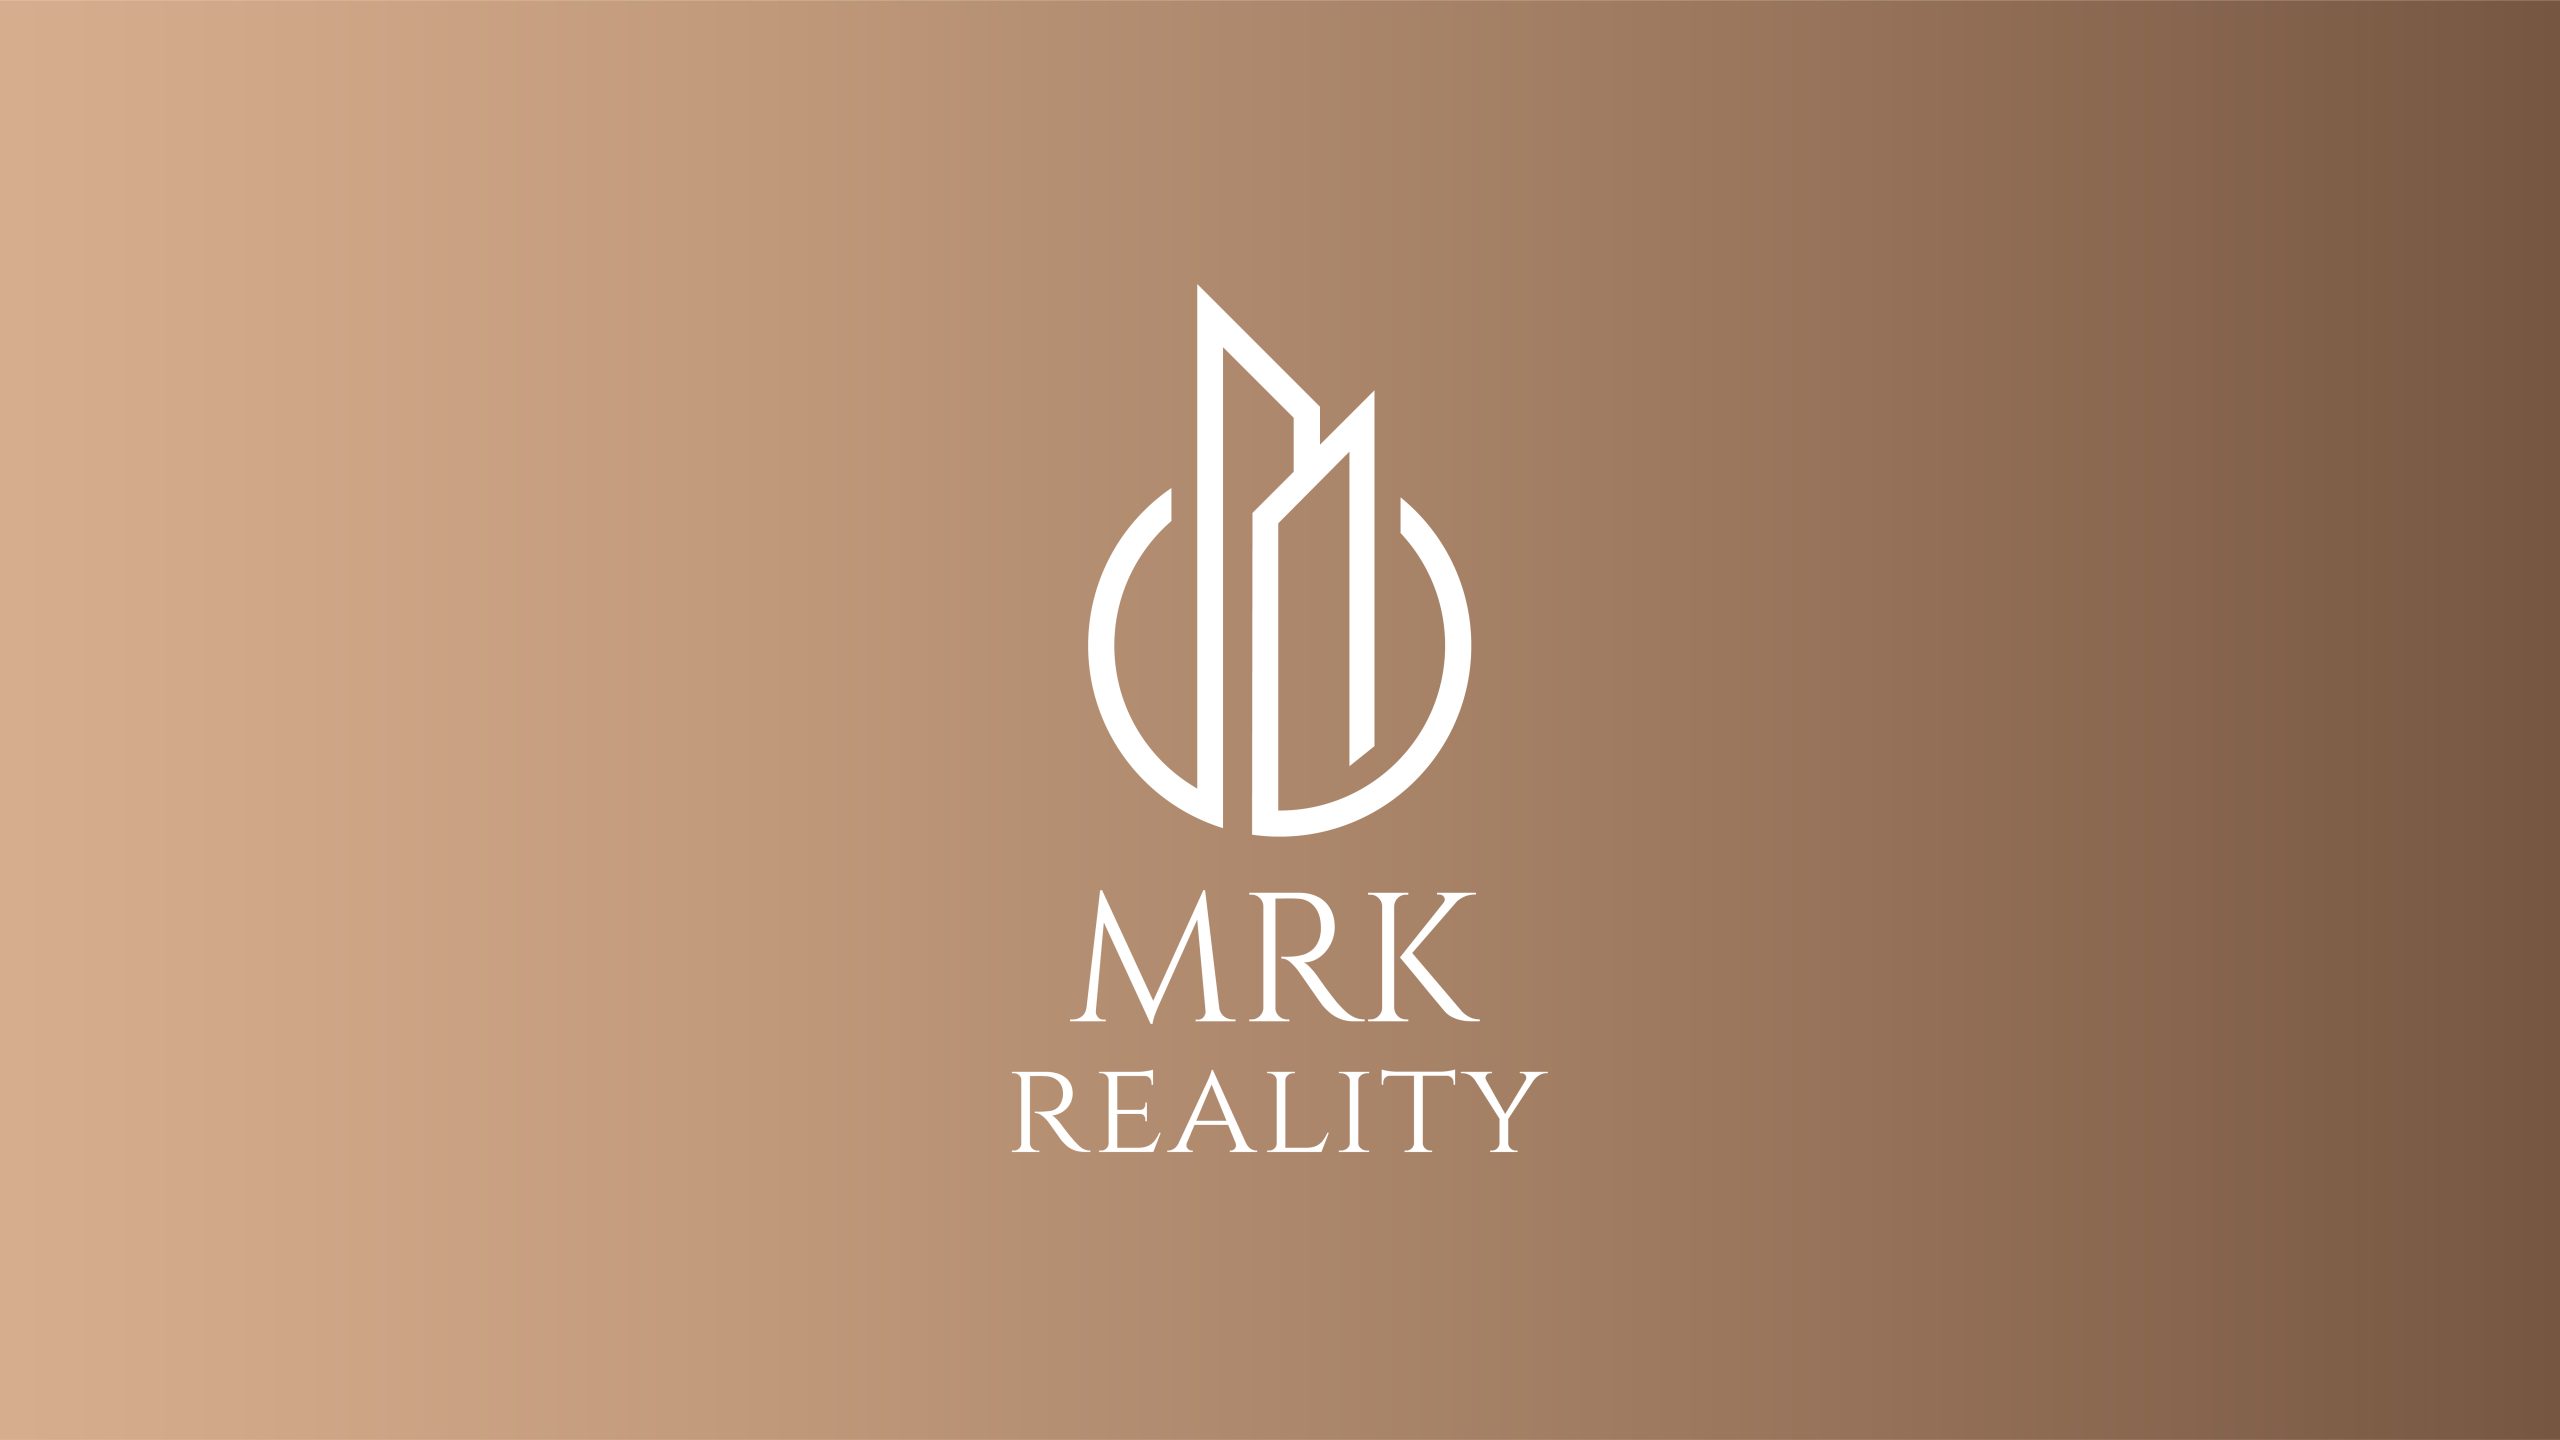 MRK Reality